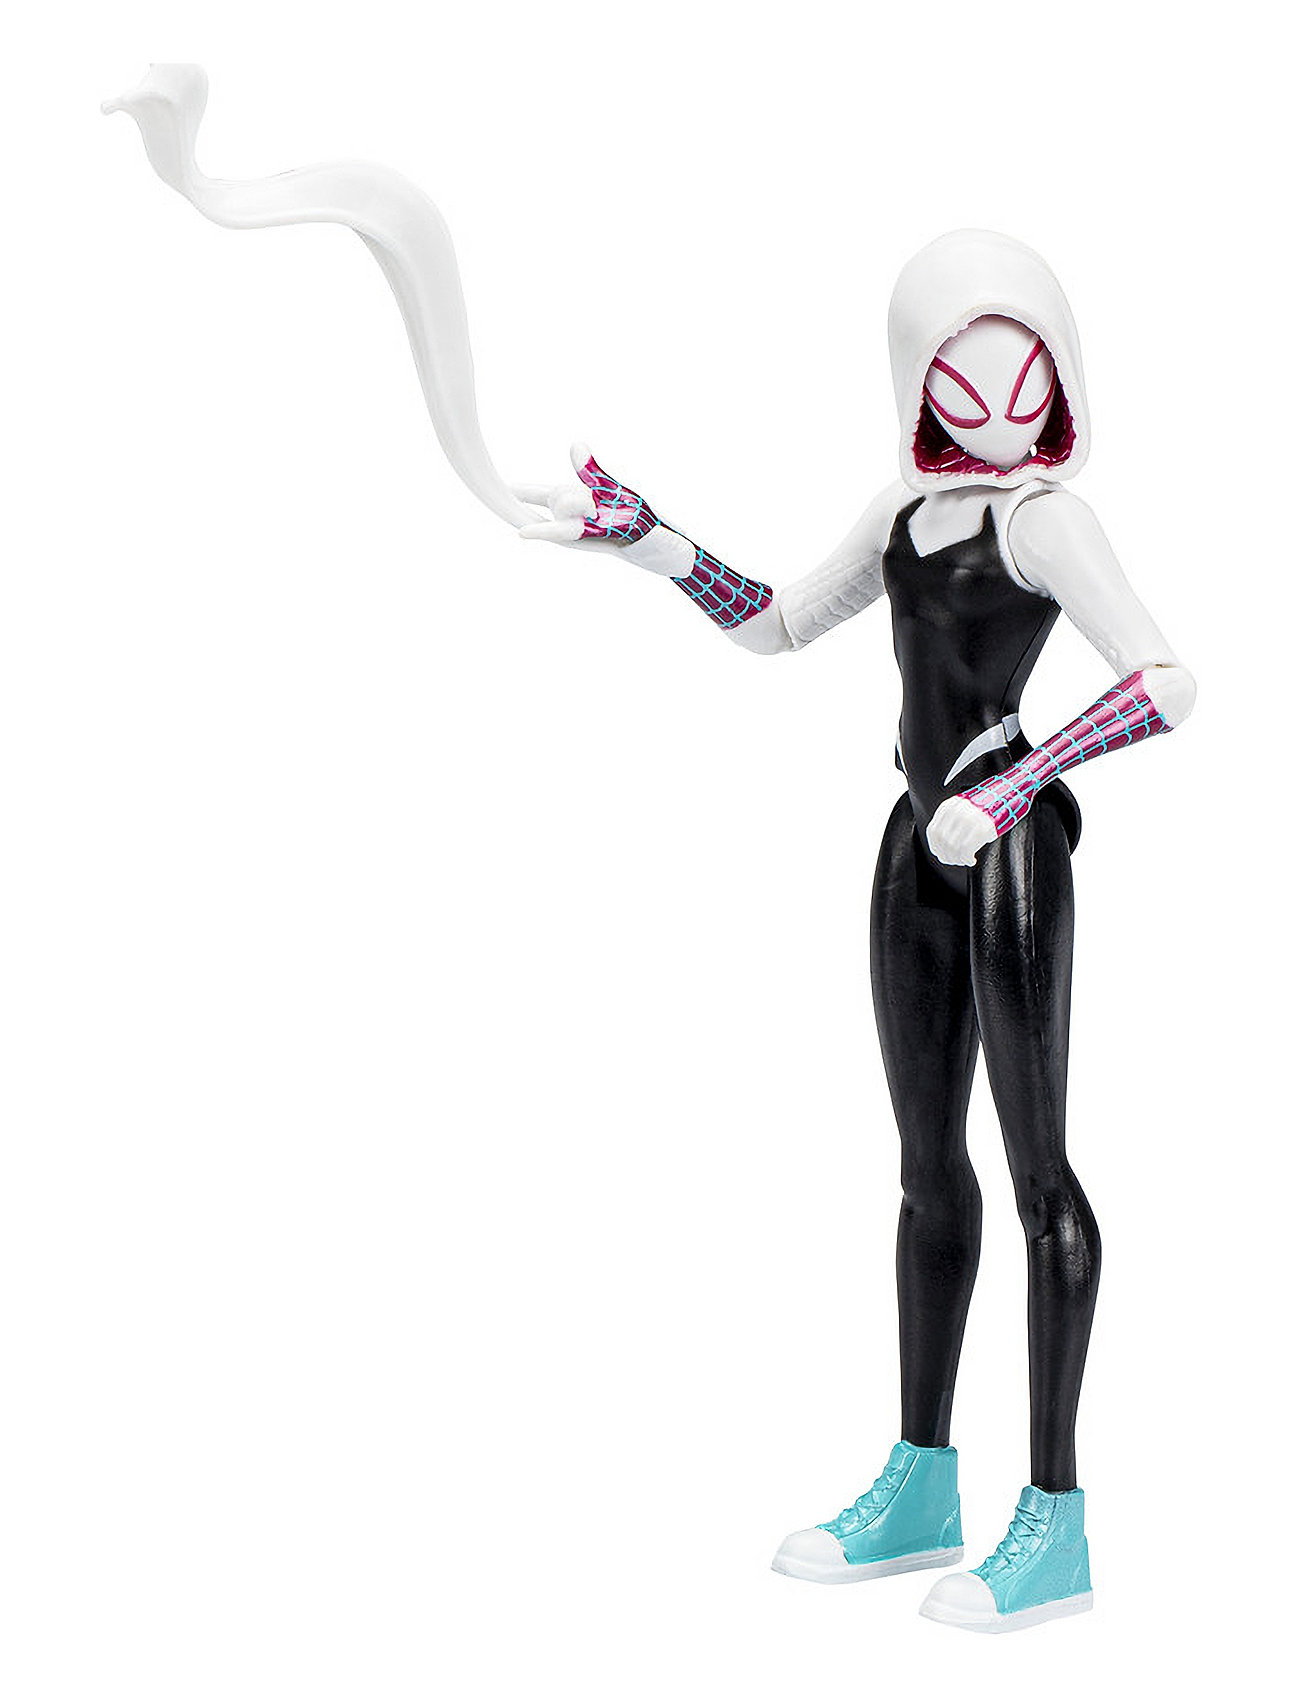 Marvel Spider-Man Spider-Gwen Toys Playsets & Action Figures Action Figures Multi/patterned Marvel